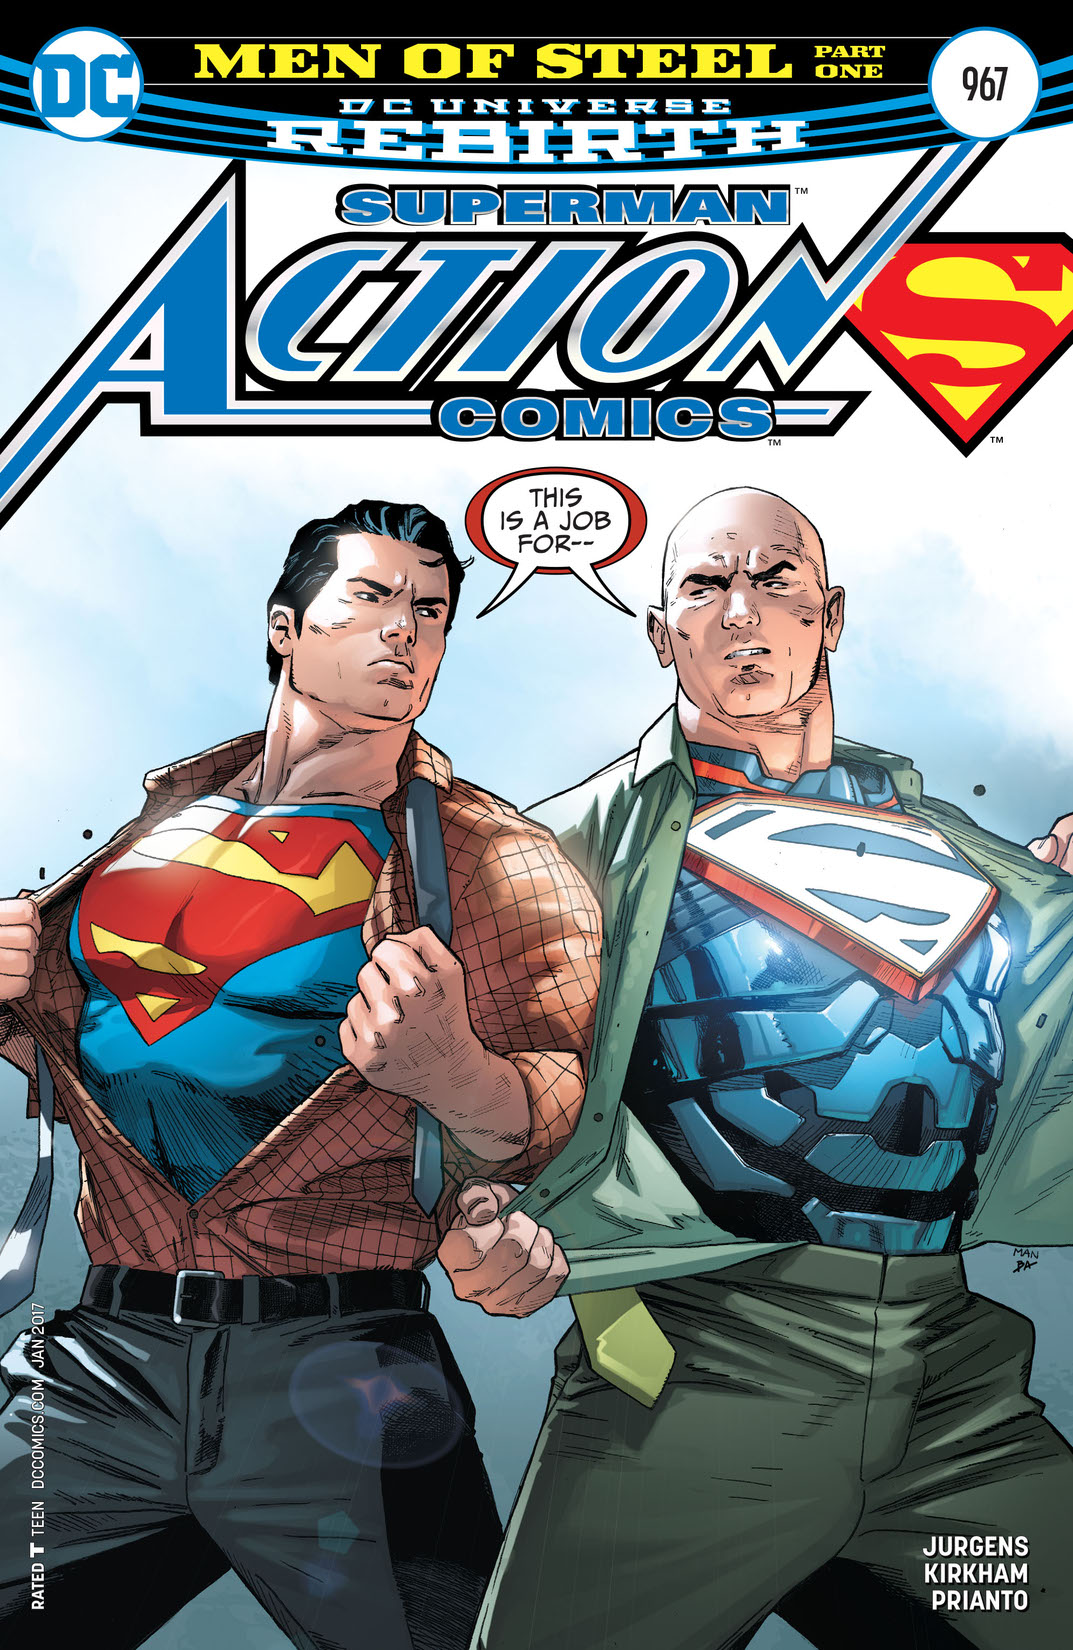 Action Comics (2016-) #967 preview images